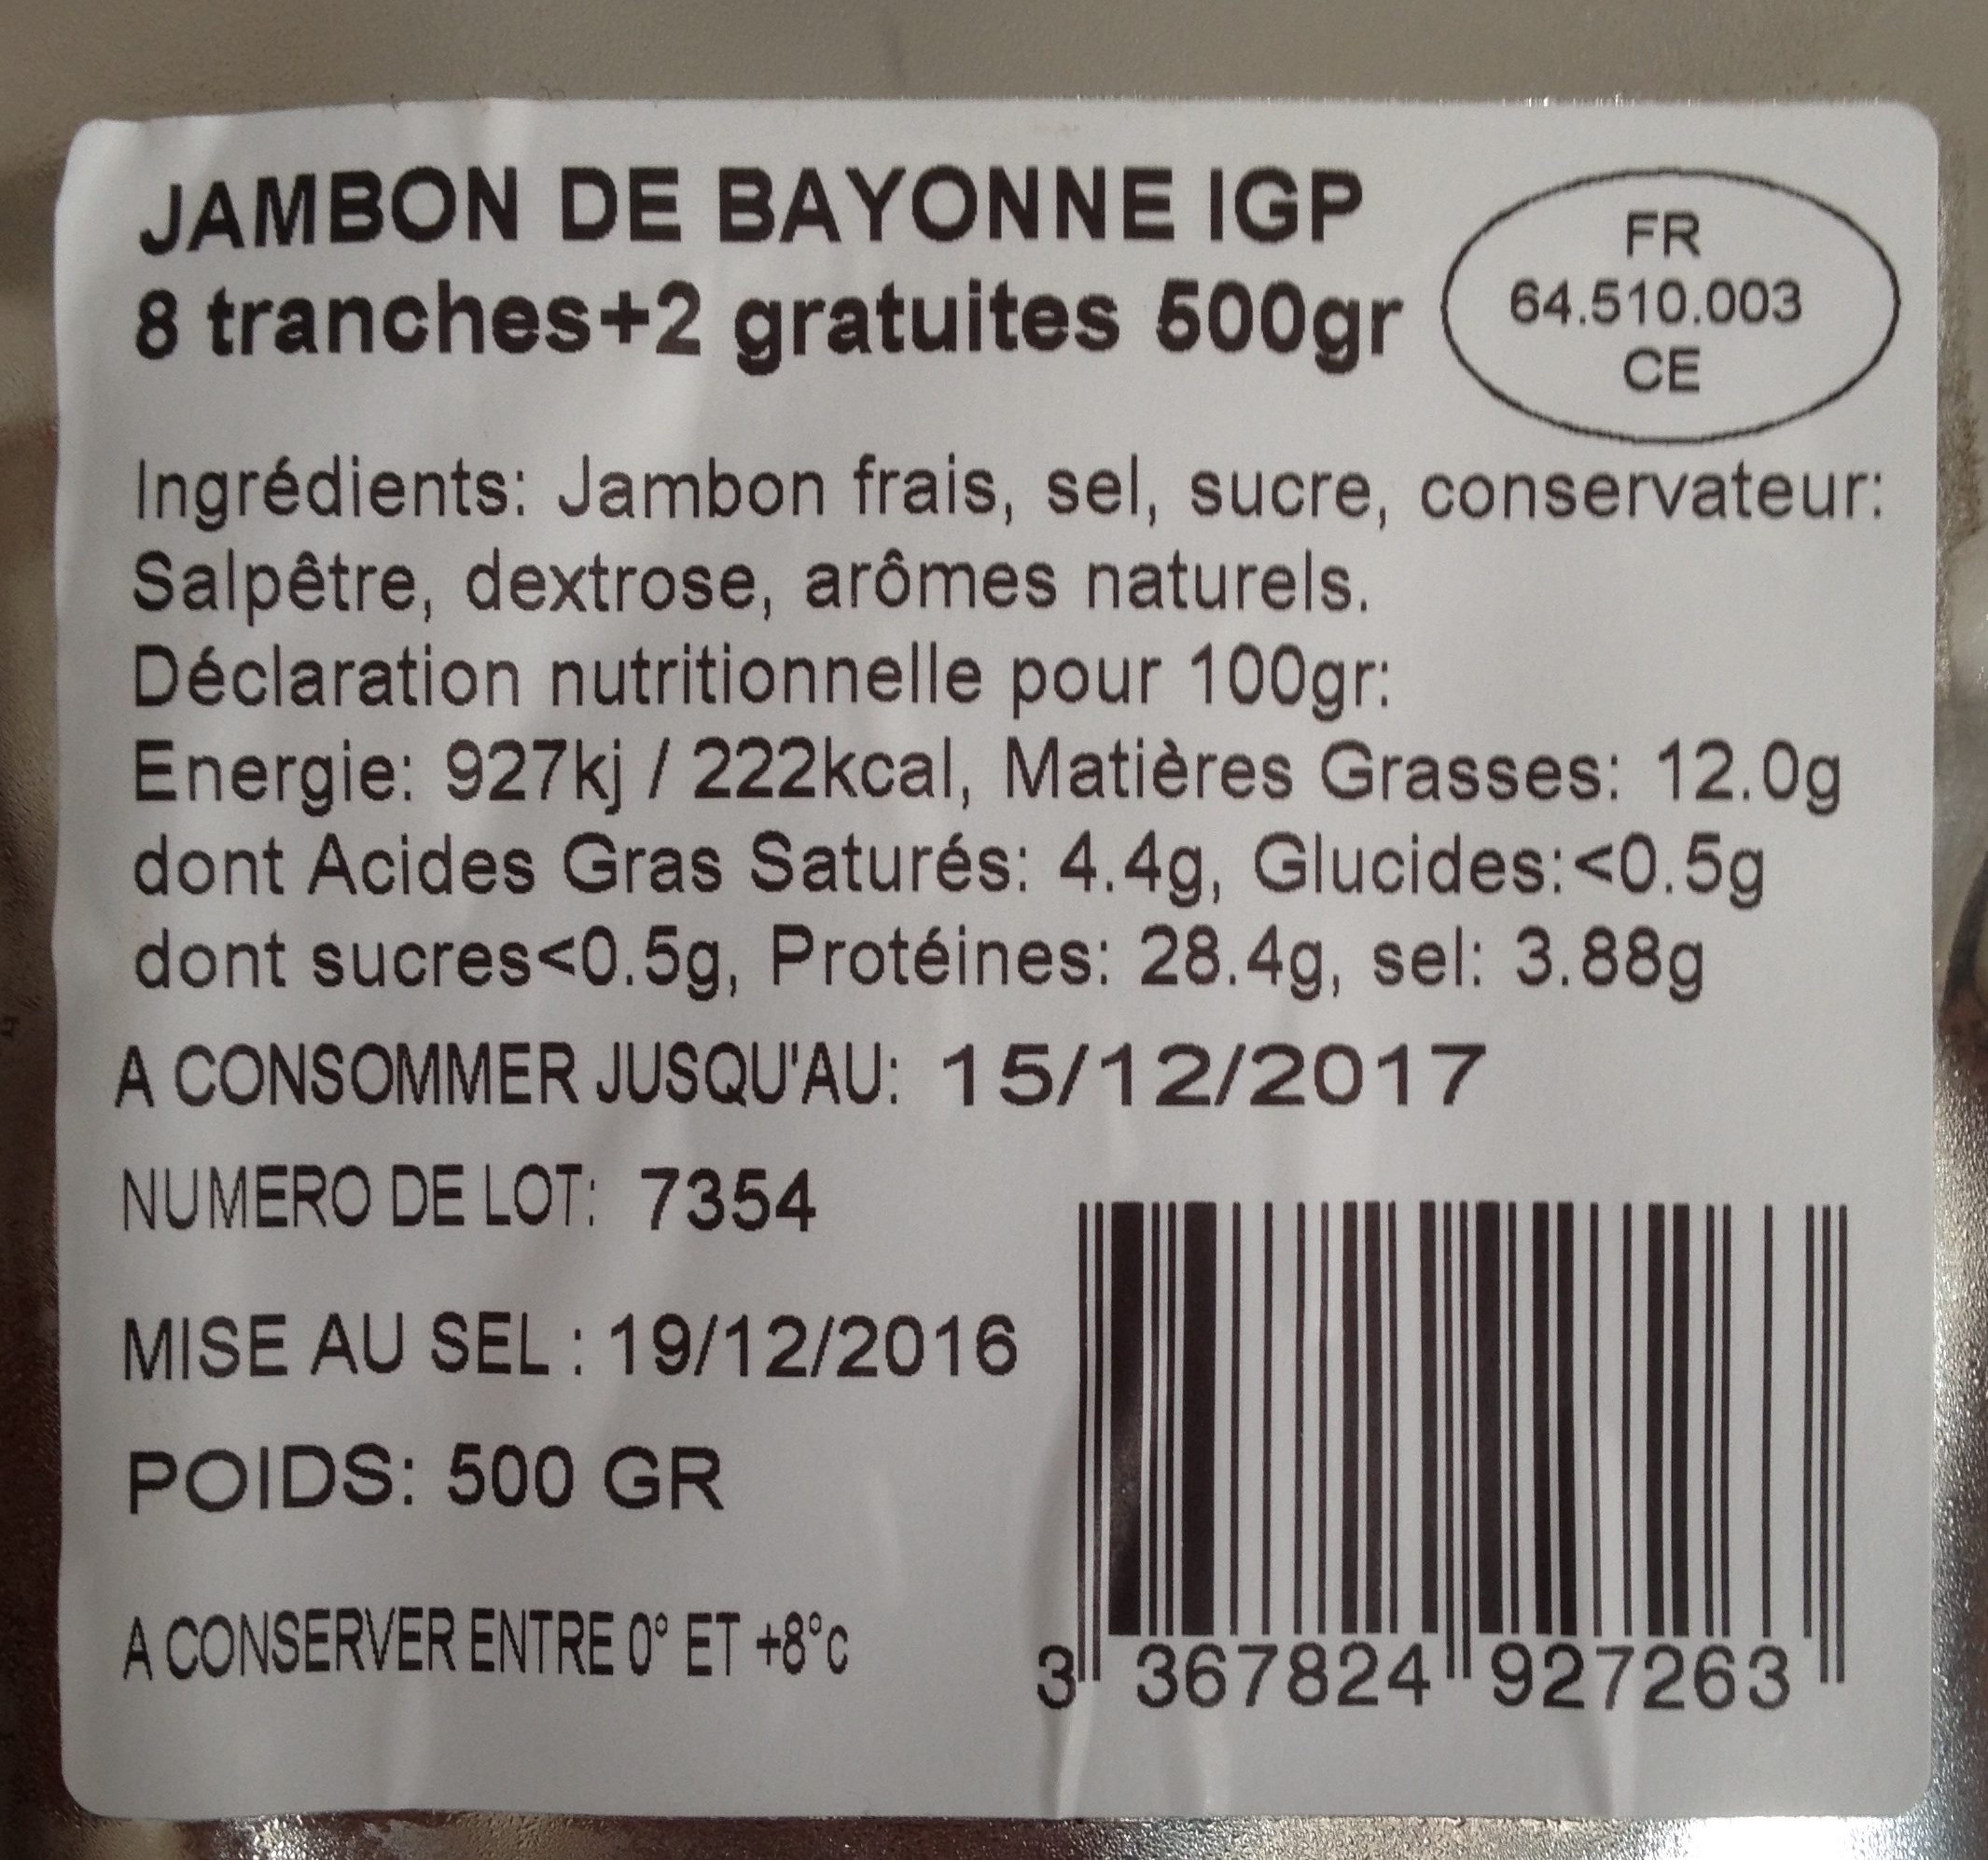 Jambon de Bayonne IGP Michel Dupuy - Ingredients - fr